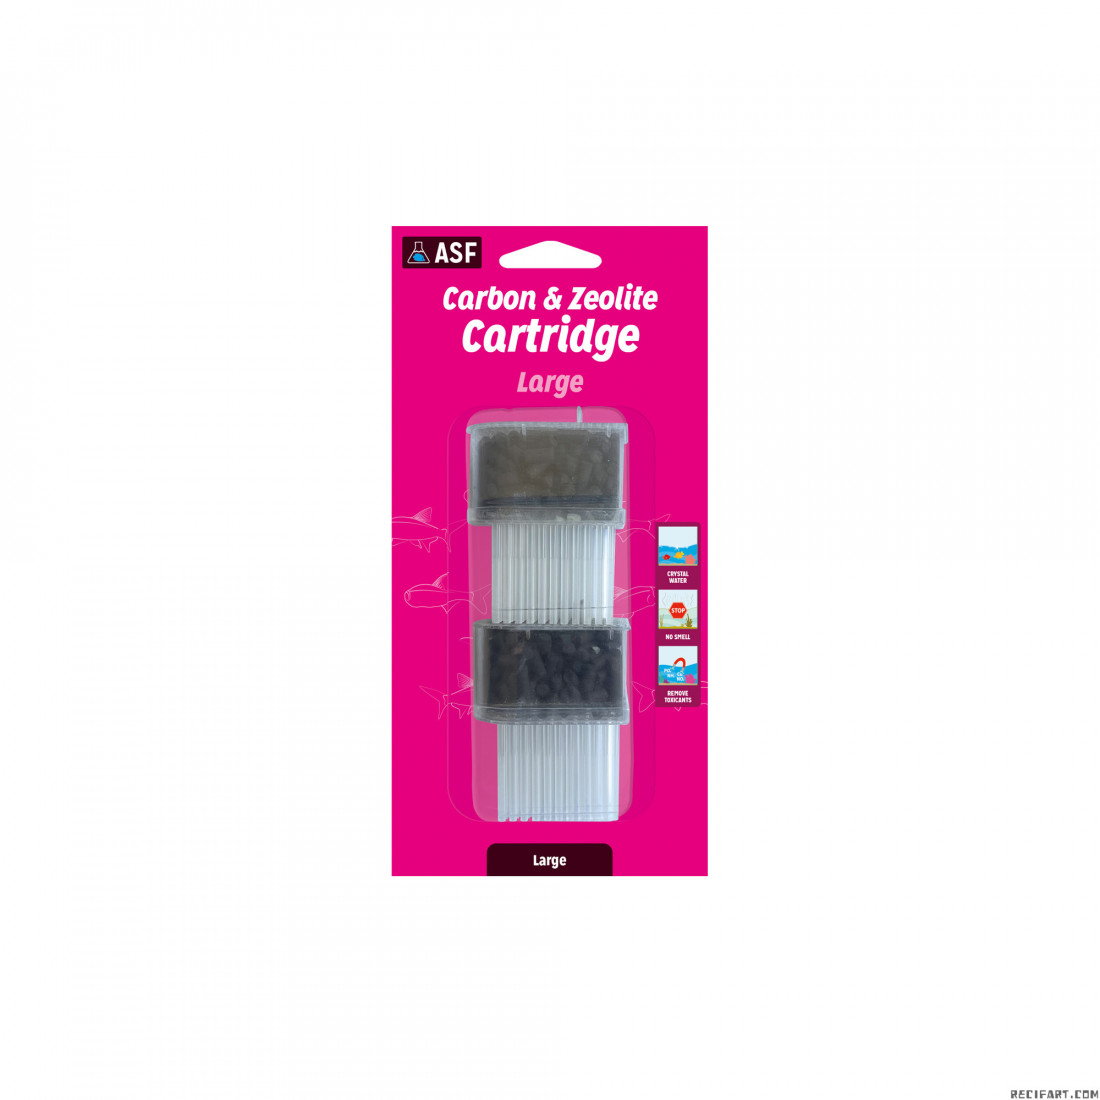 Carbon cartridge